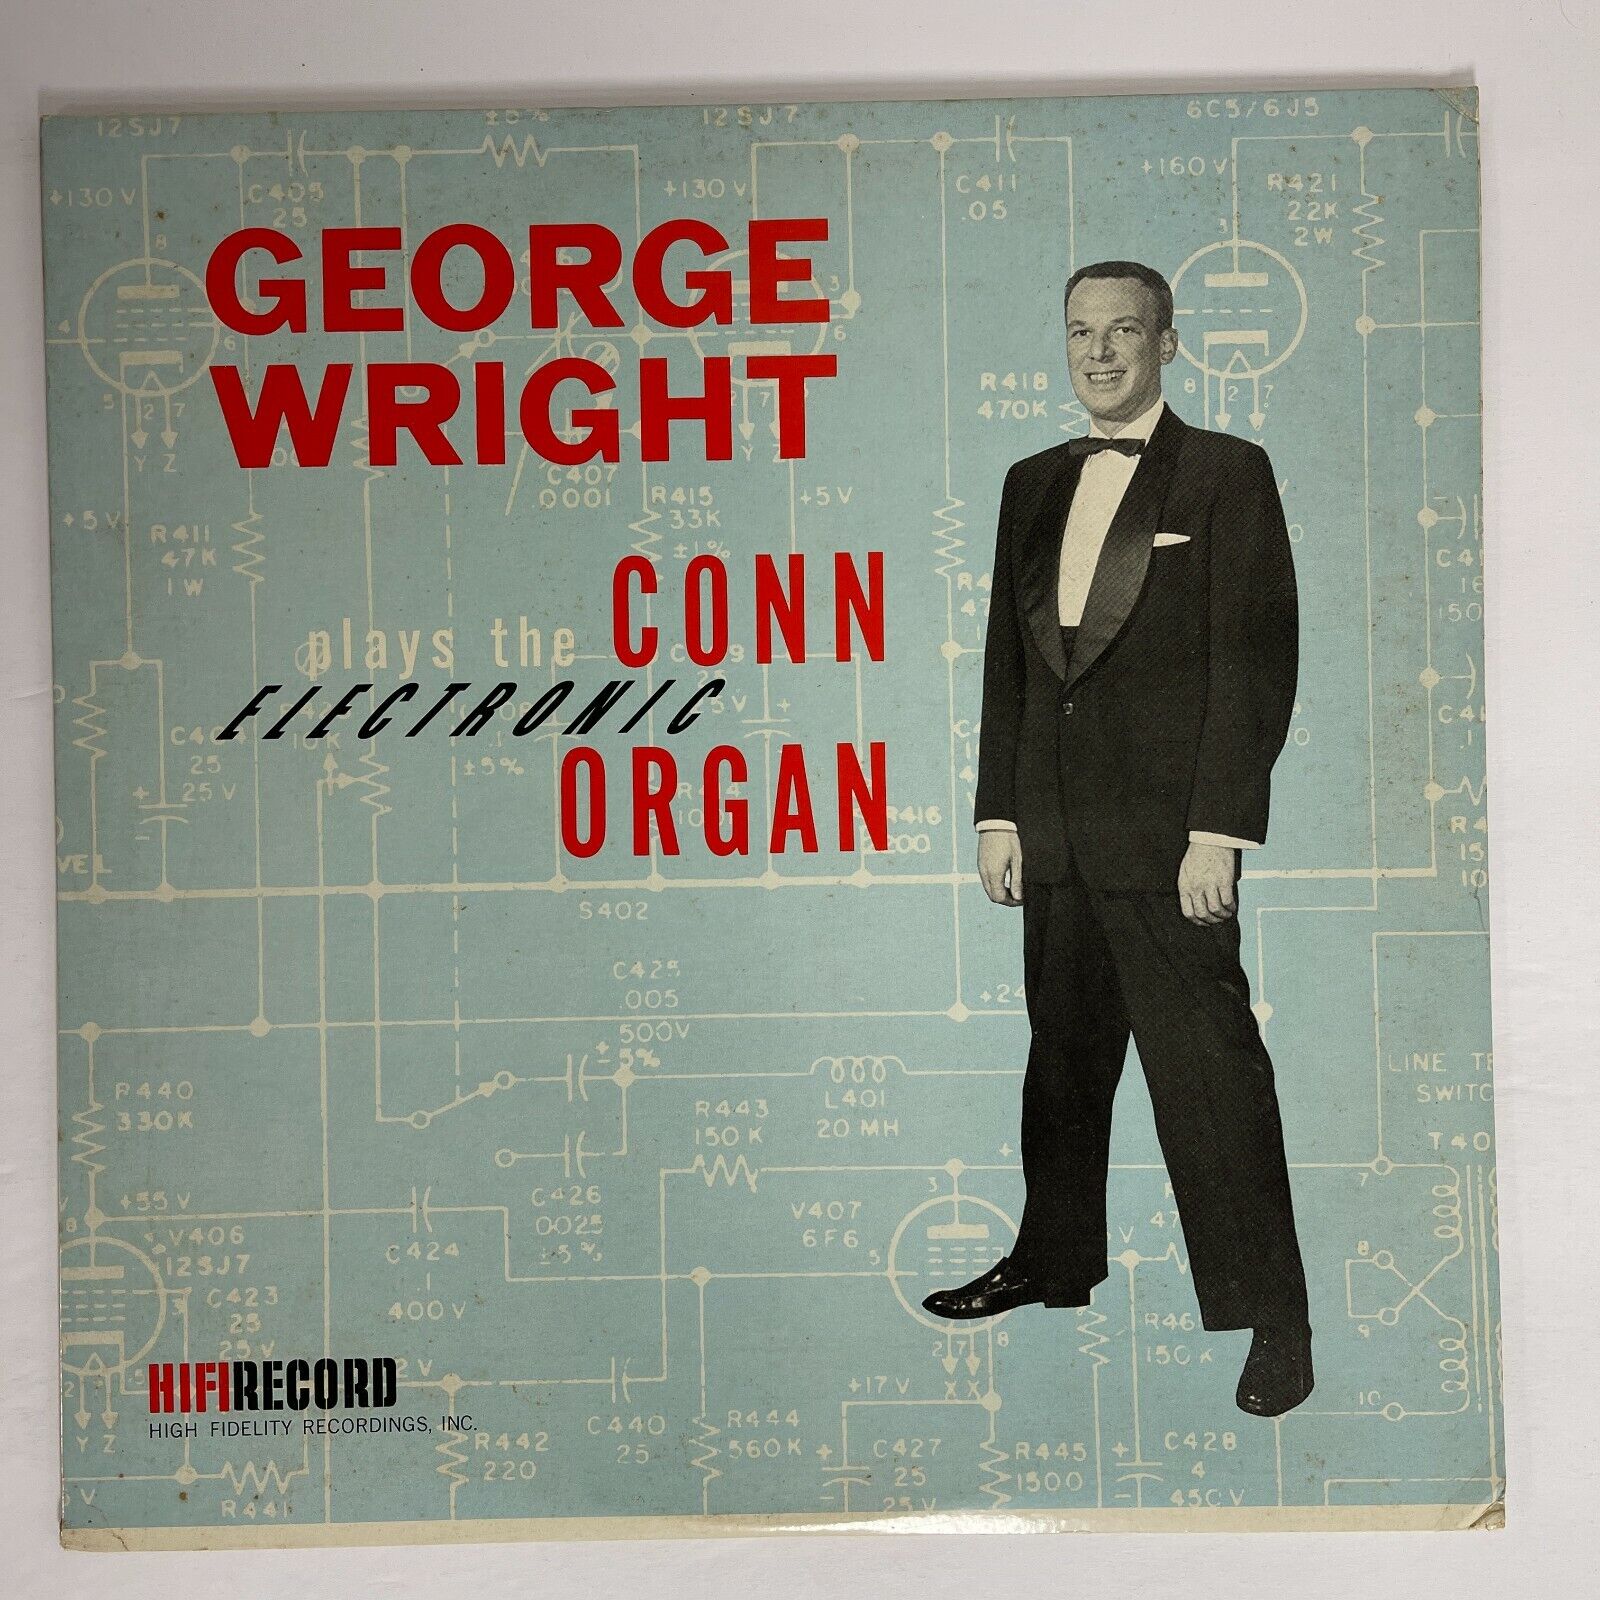 George Wright Plays The Conn Electronic Organ Vinyl, LP 1957 HiFi Records – R 71